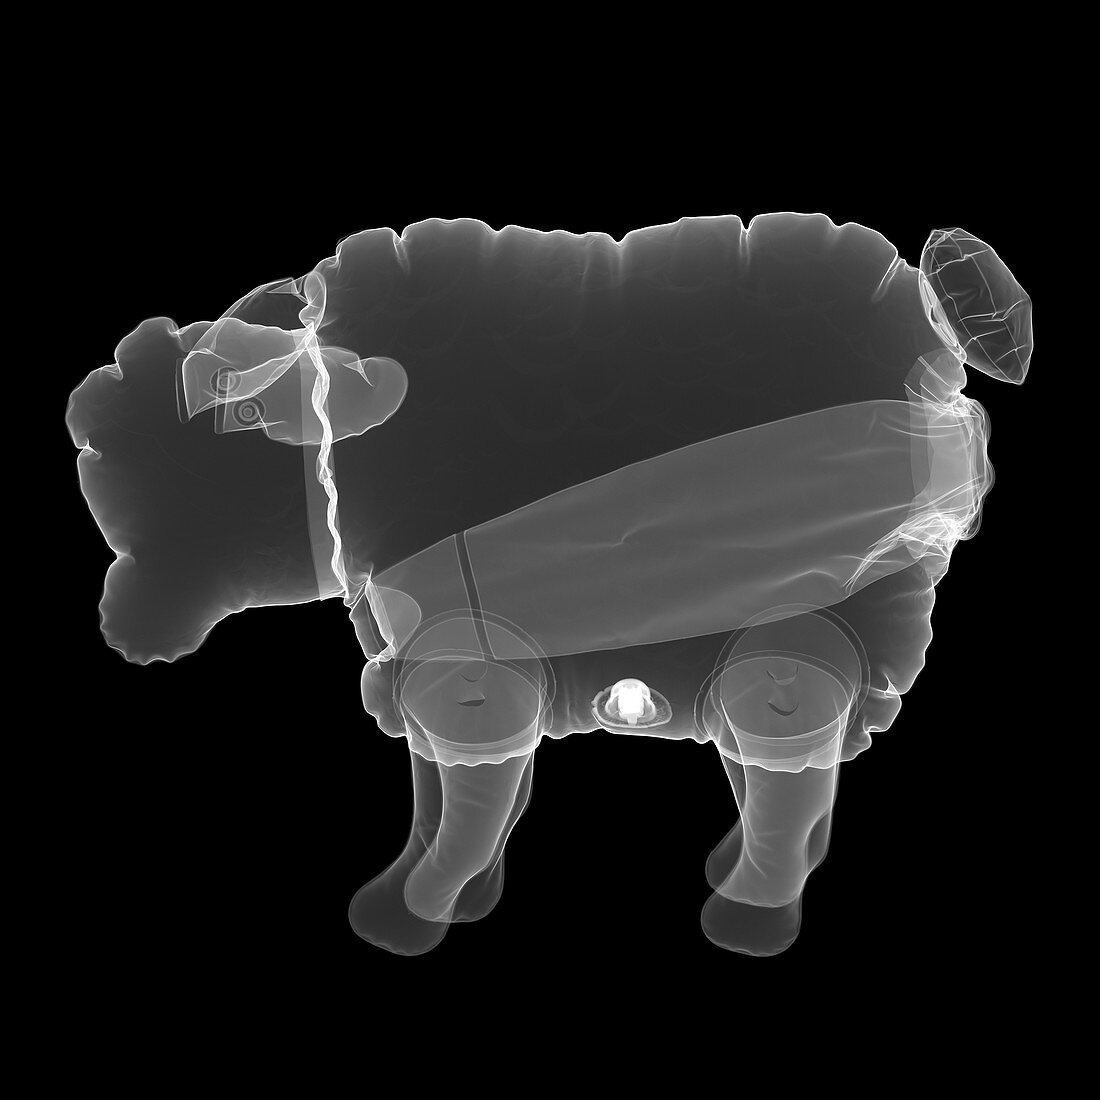 Inflatable sheep, X-ray